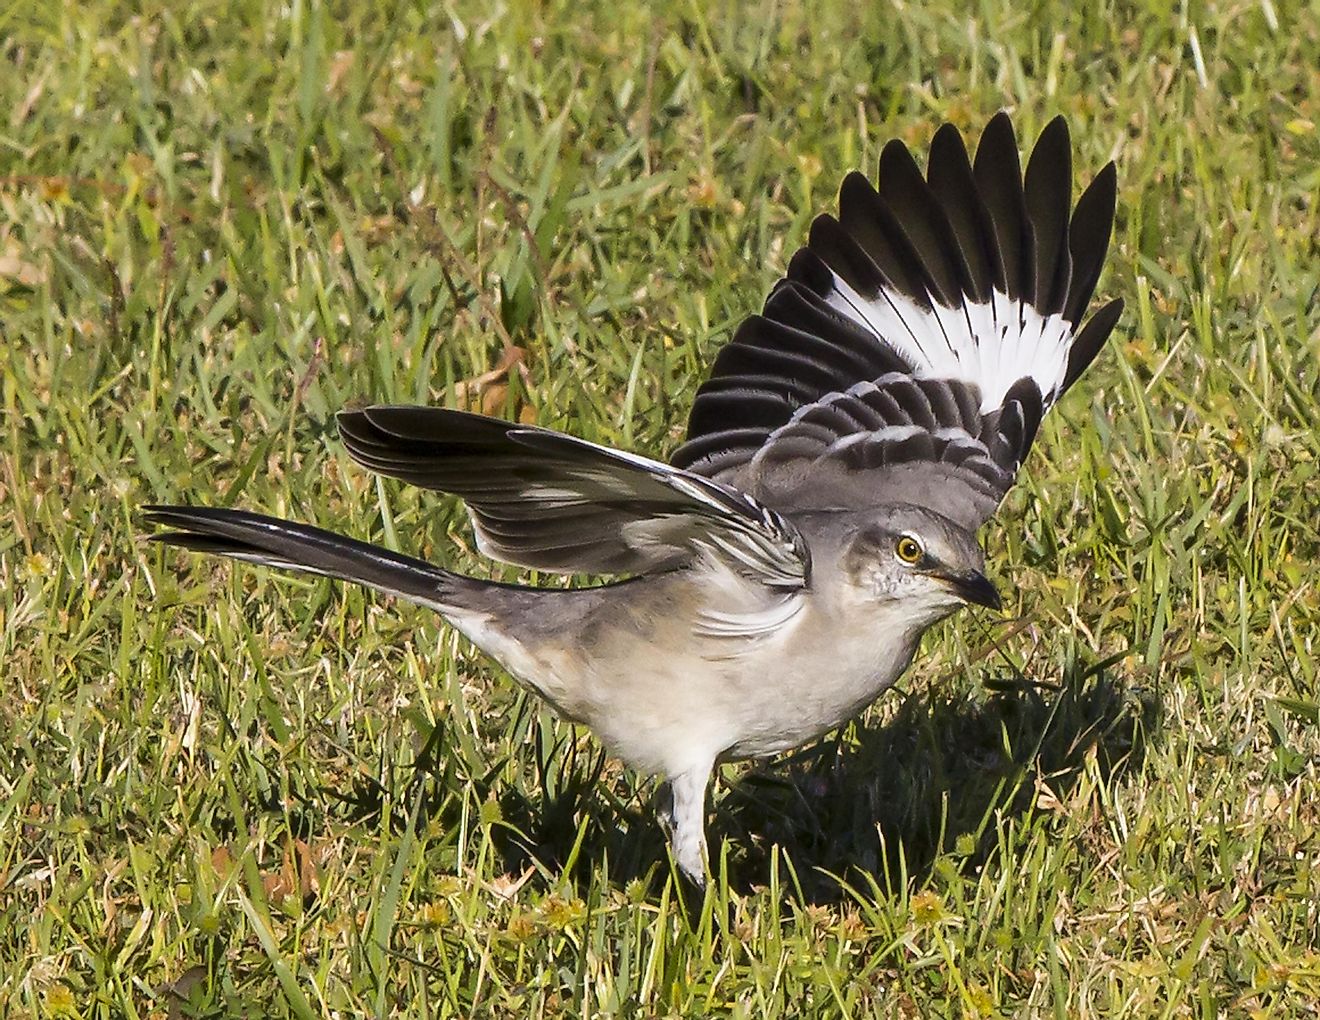 The northern mockingbird has impressive vocal skills.